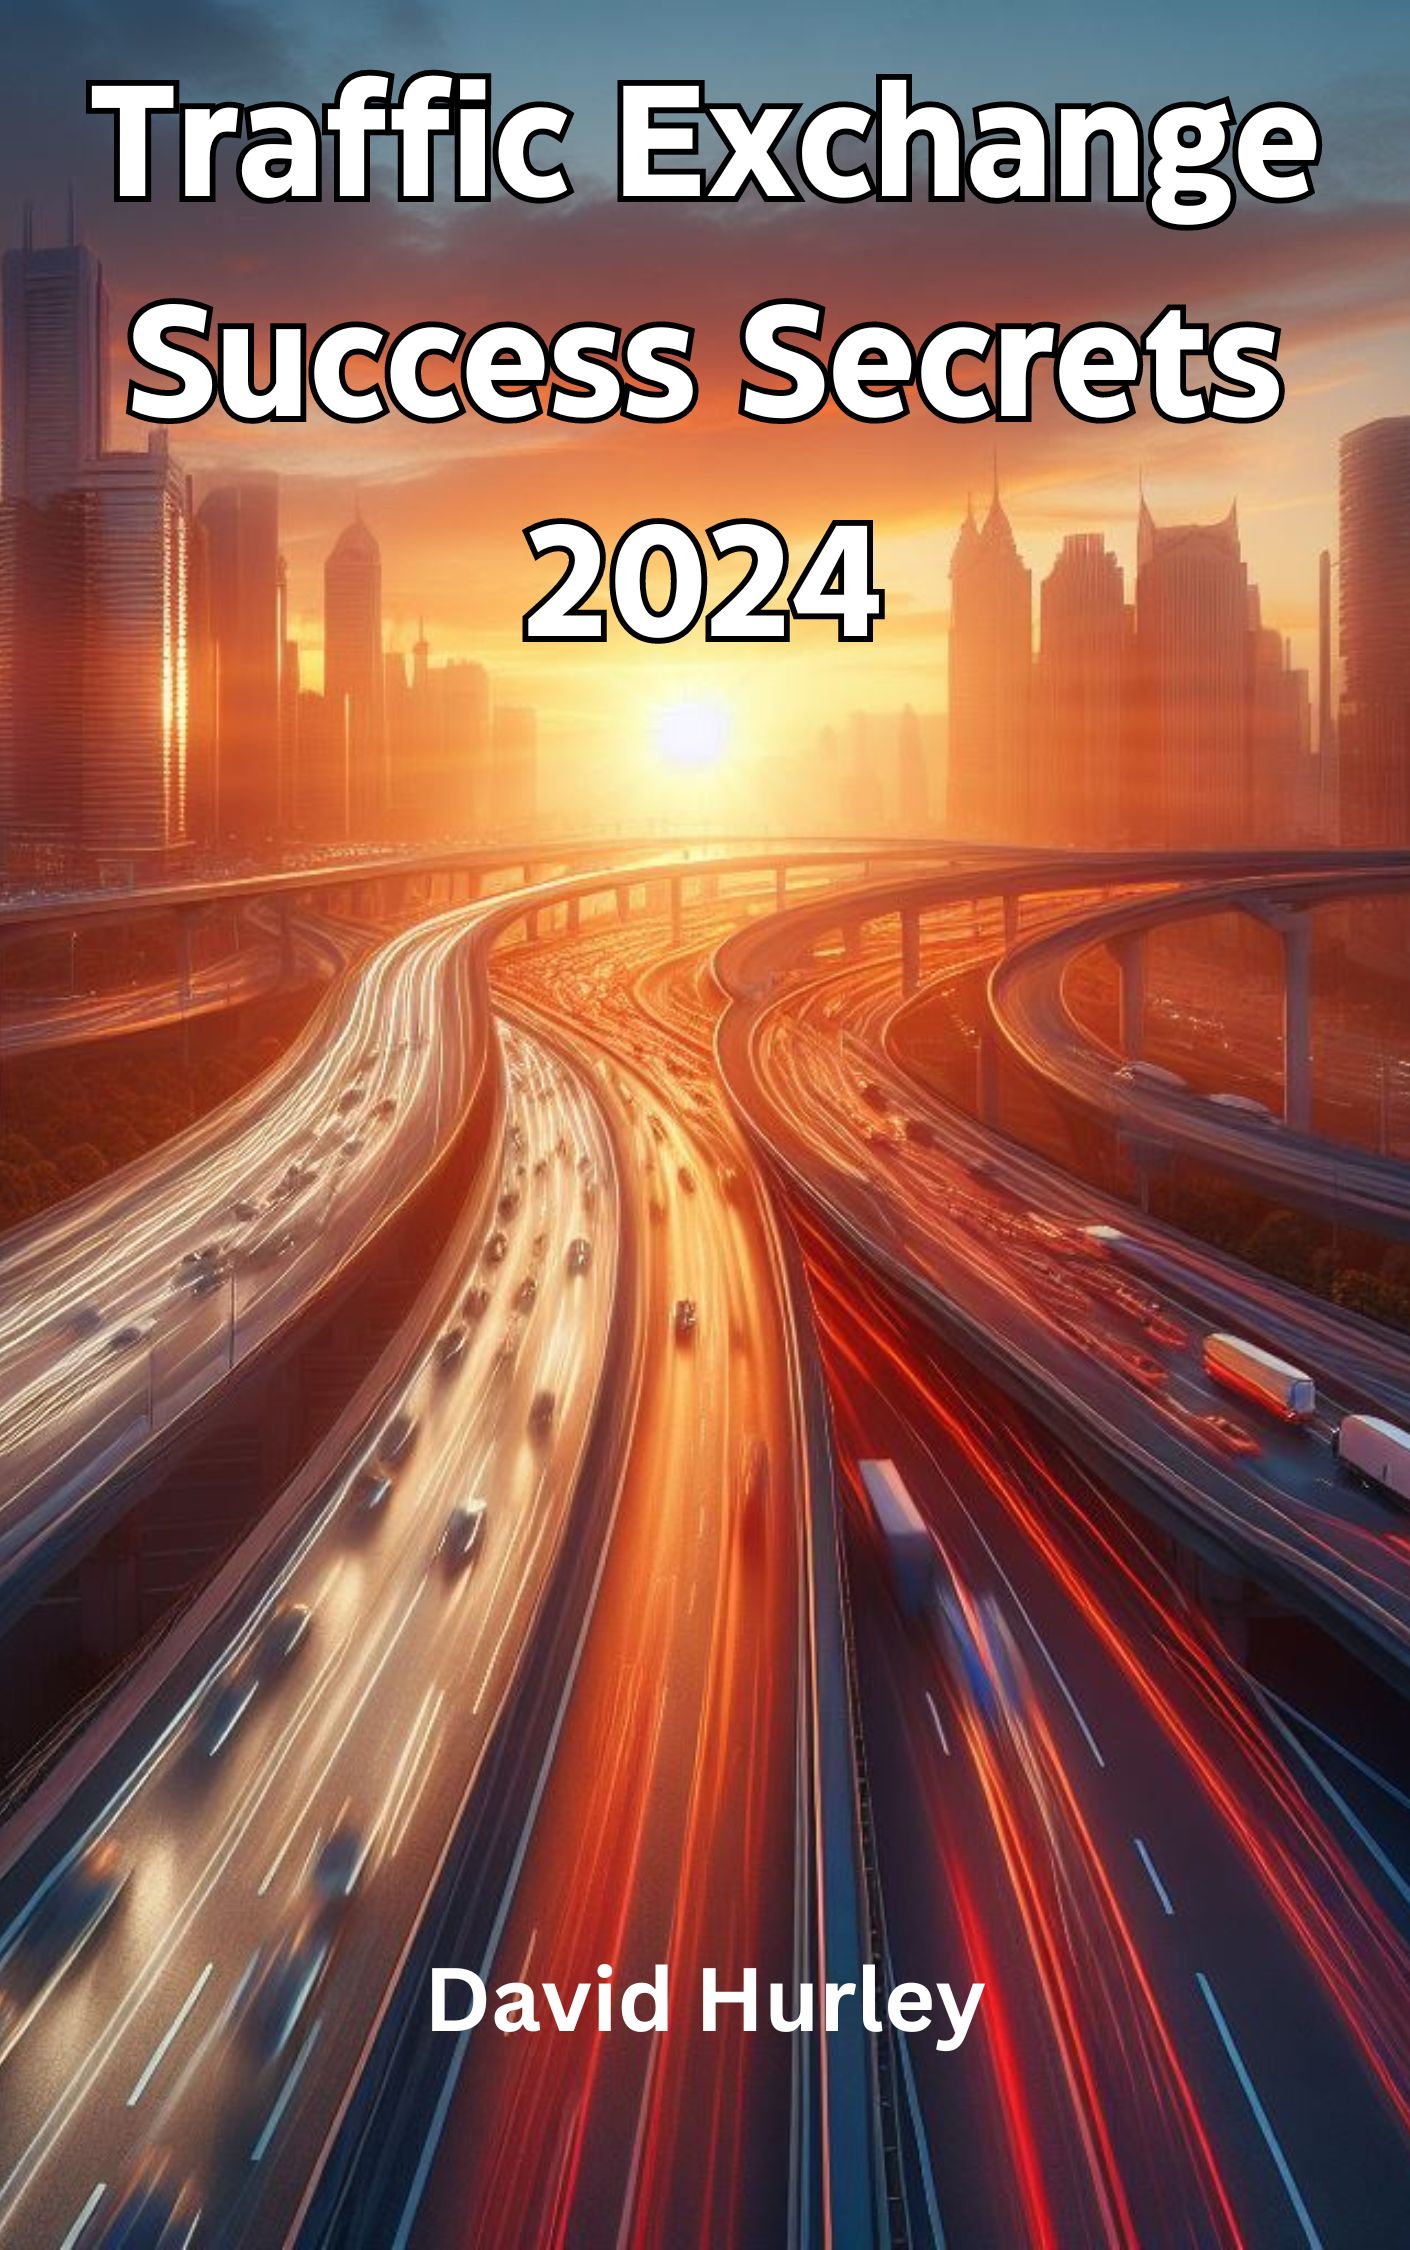  "Traffic Exchange Success Secrets 2024.jpg"